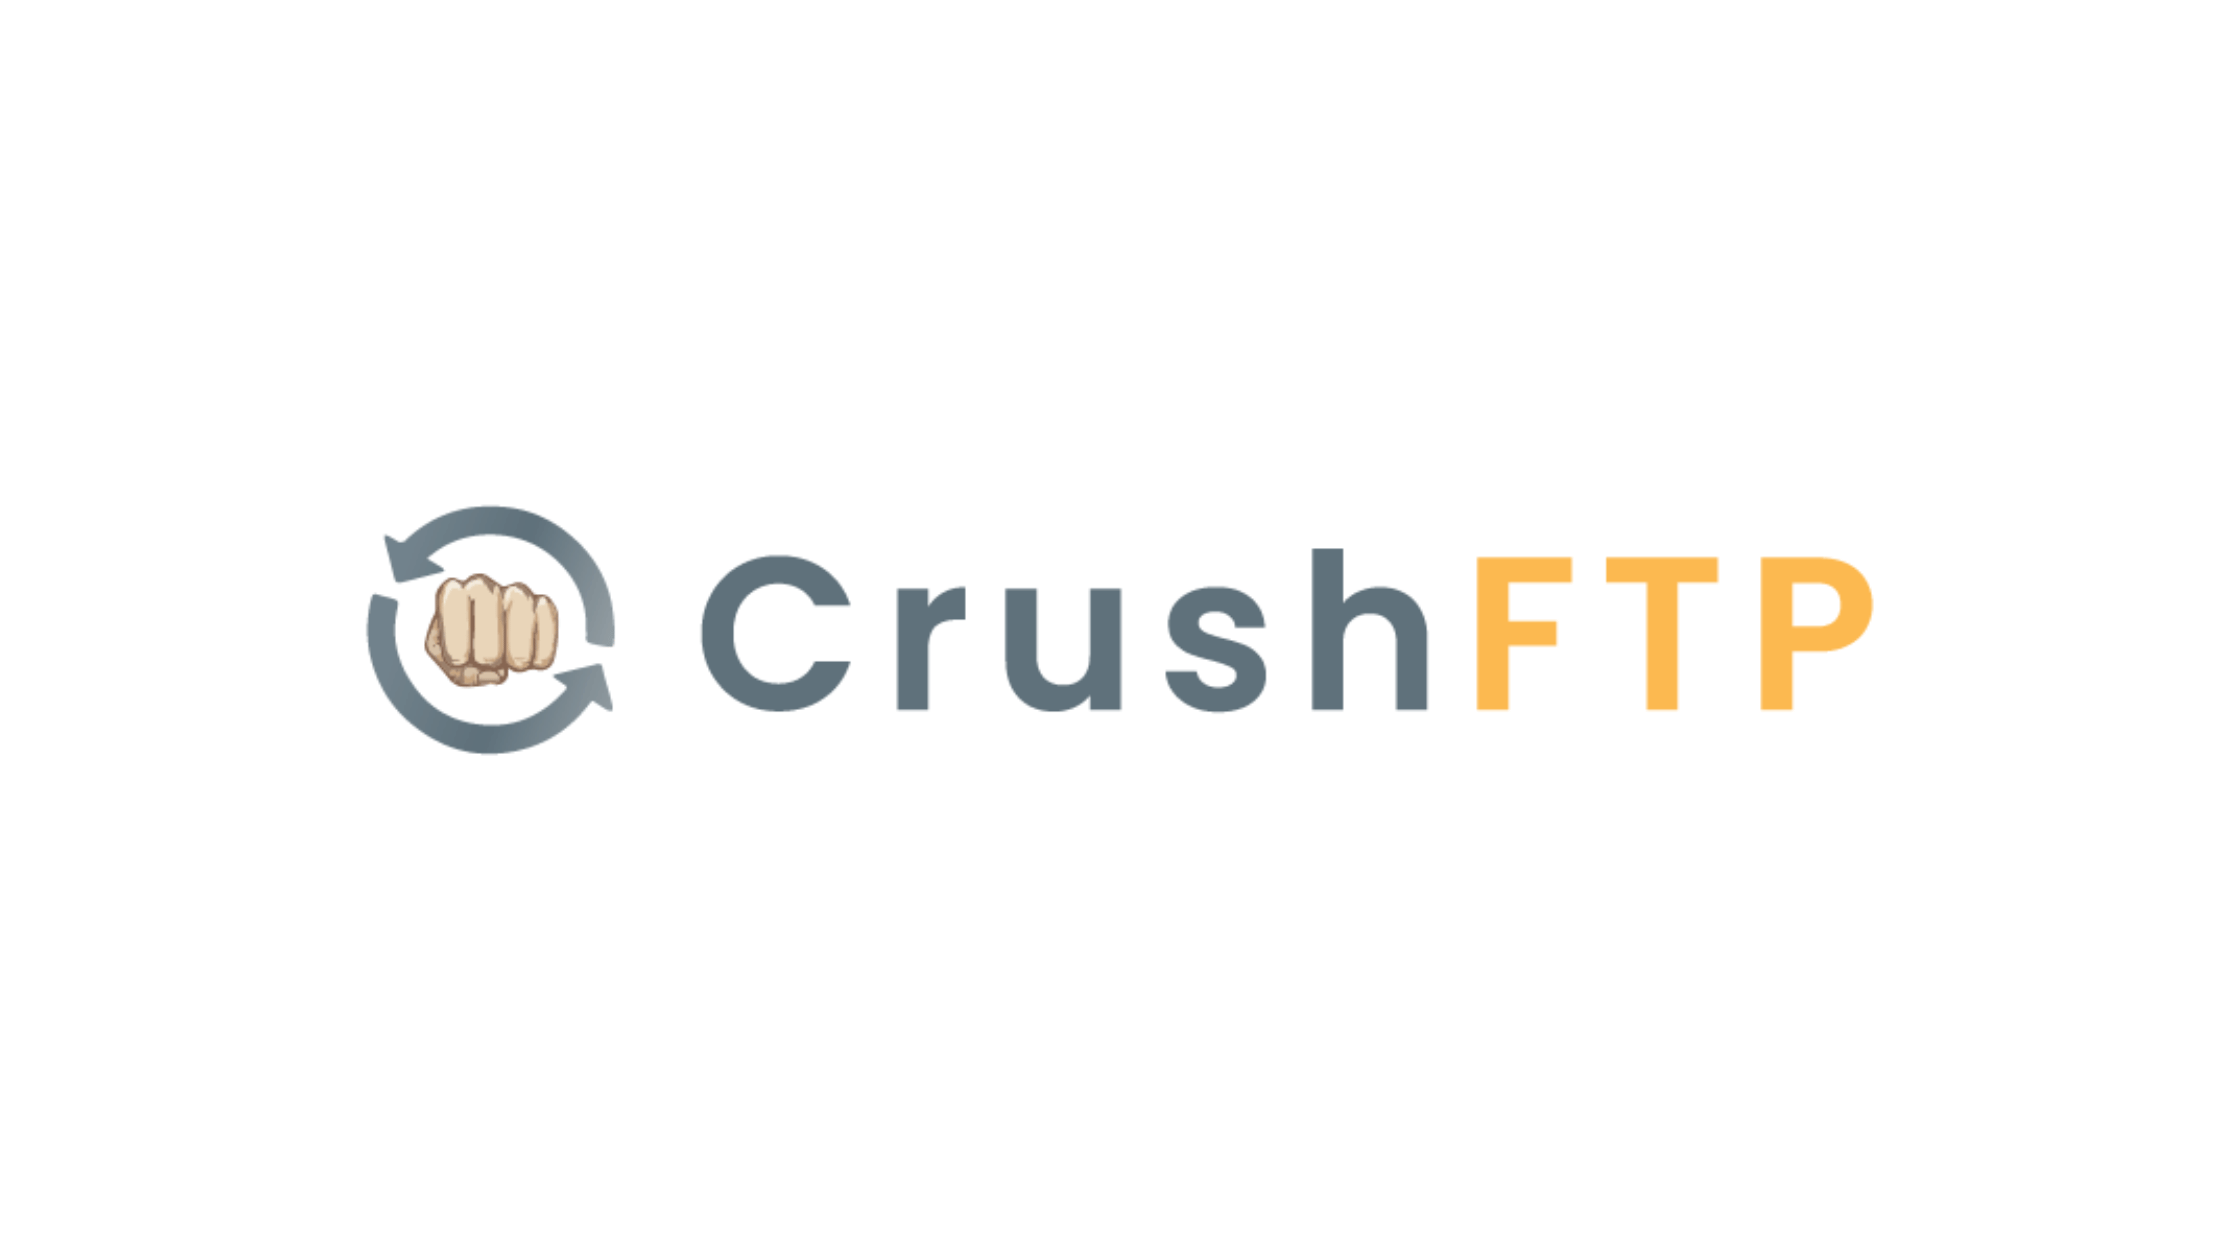 CrushFTP logo with white background